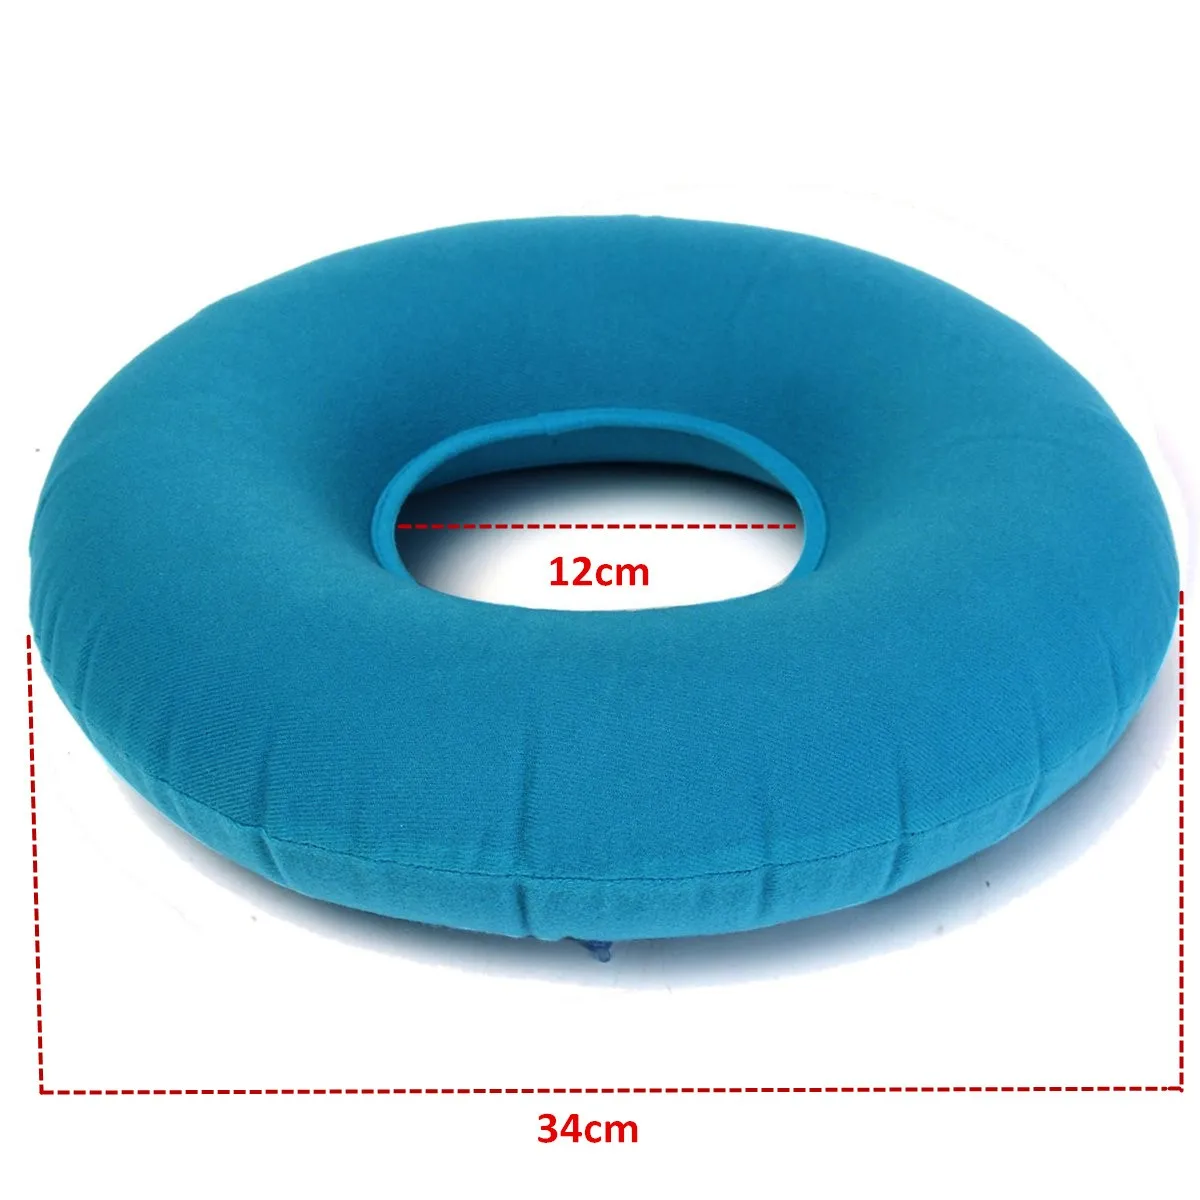 https://ae01.alicdn.com/kf/HTB1dr4DQFXXXXXSXVXXq6xXFXXXo/Inflatable-Rubber-Ring-Round-Seat-Cushion-Medical-Hemorrhoid-Pillow-Donut-34cm.jpg